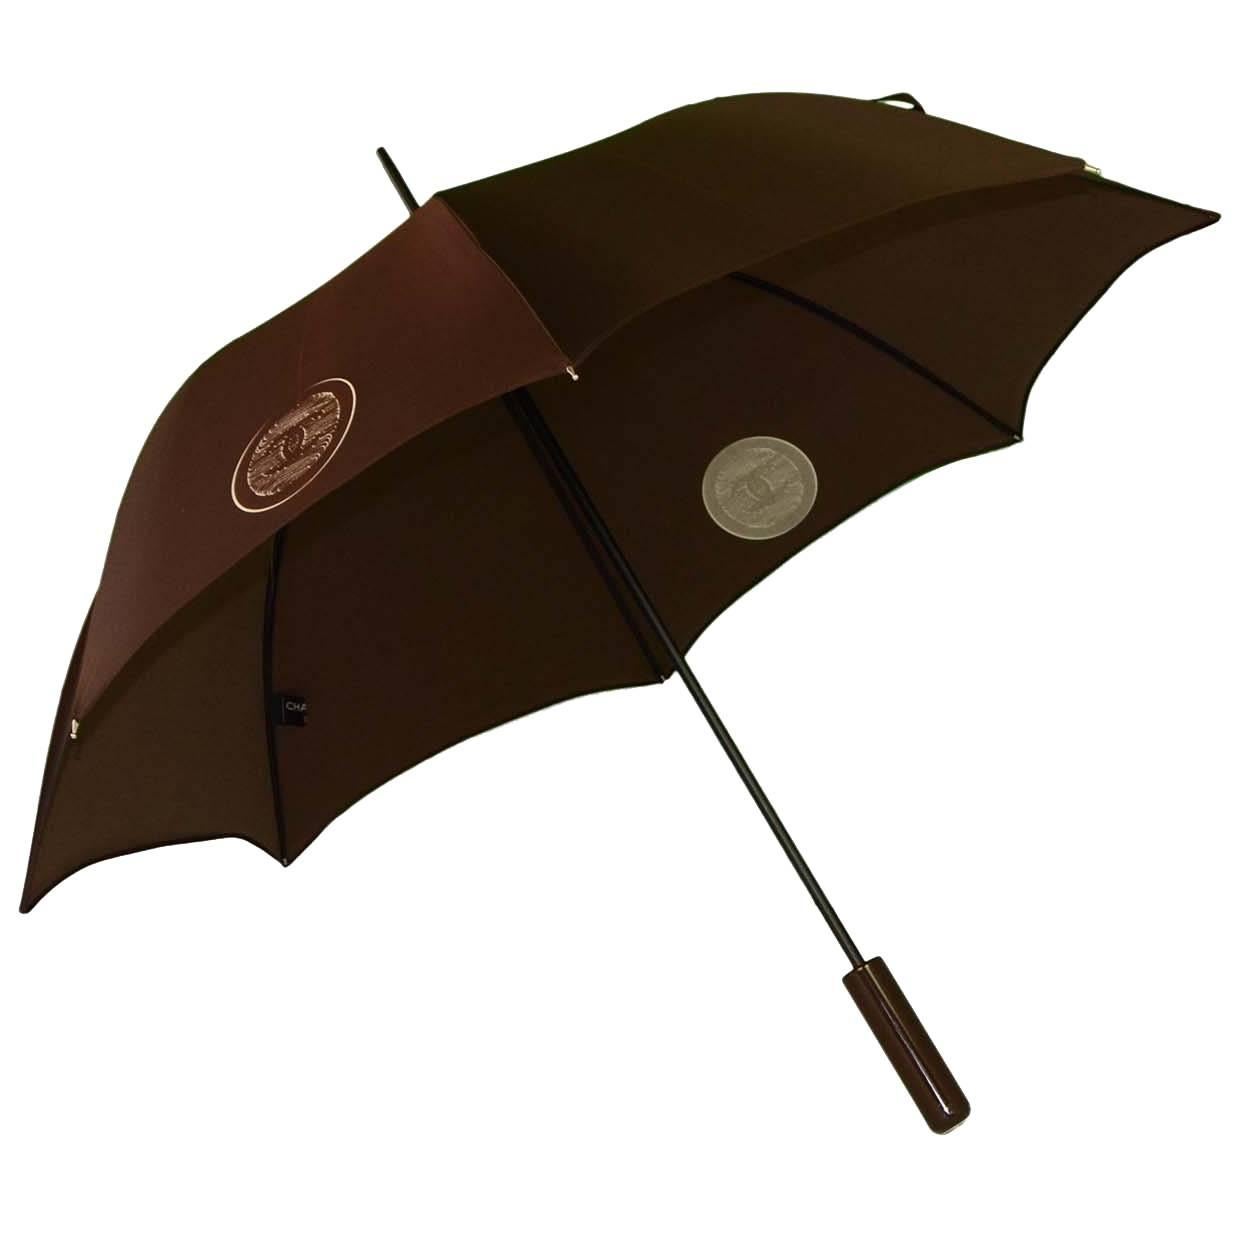 Chanel Large Brown & White Umbrella